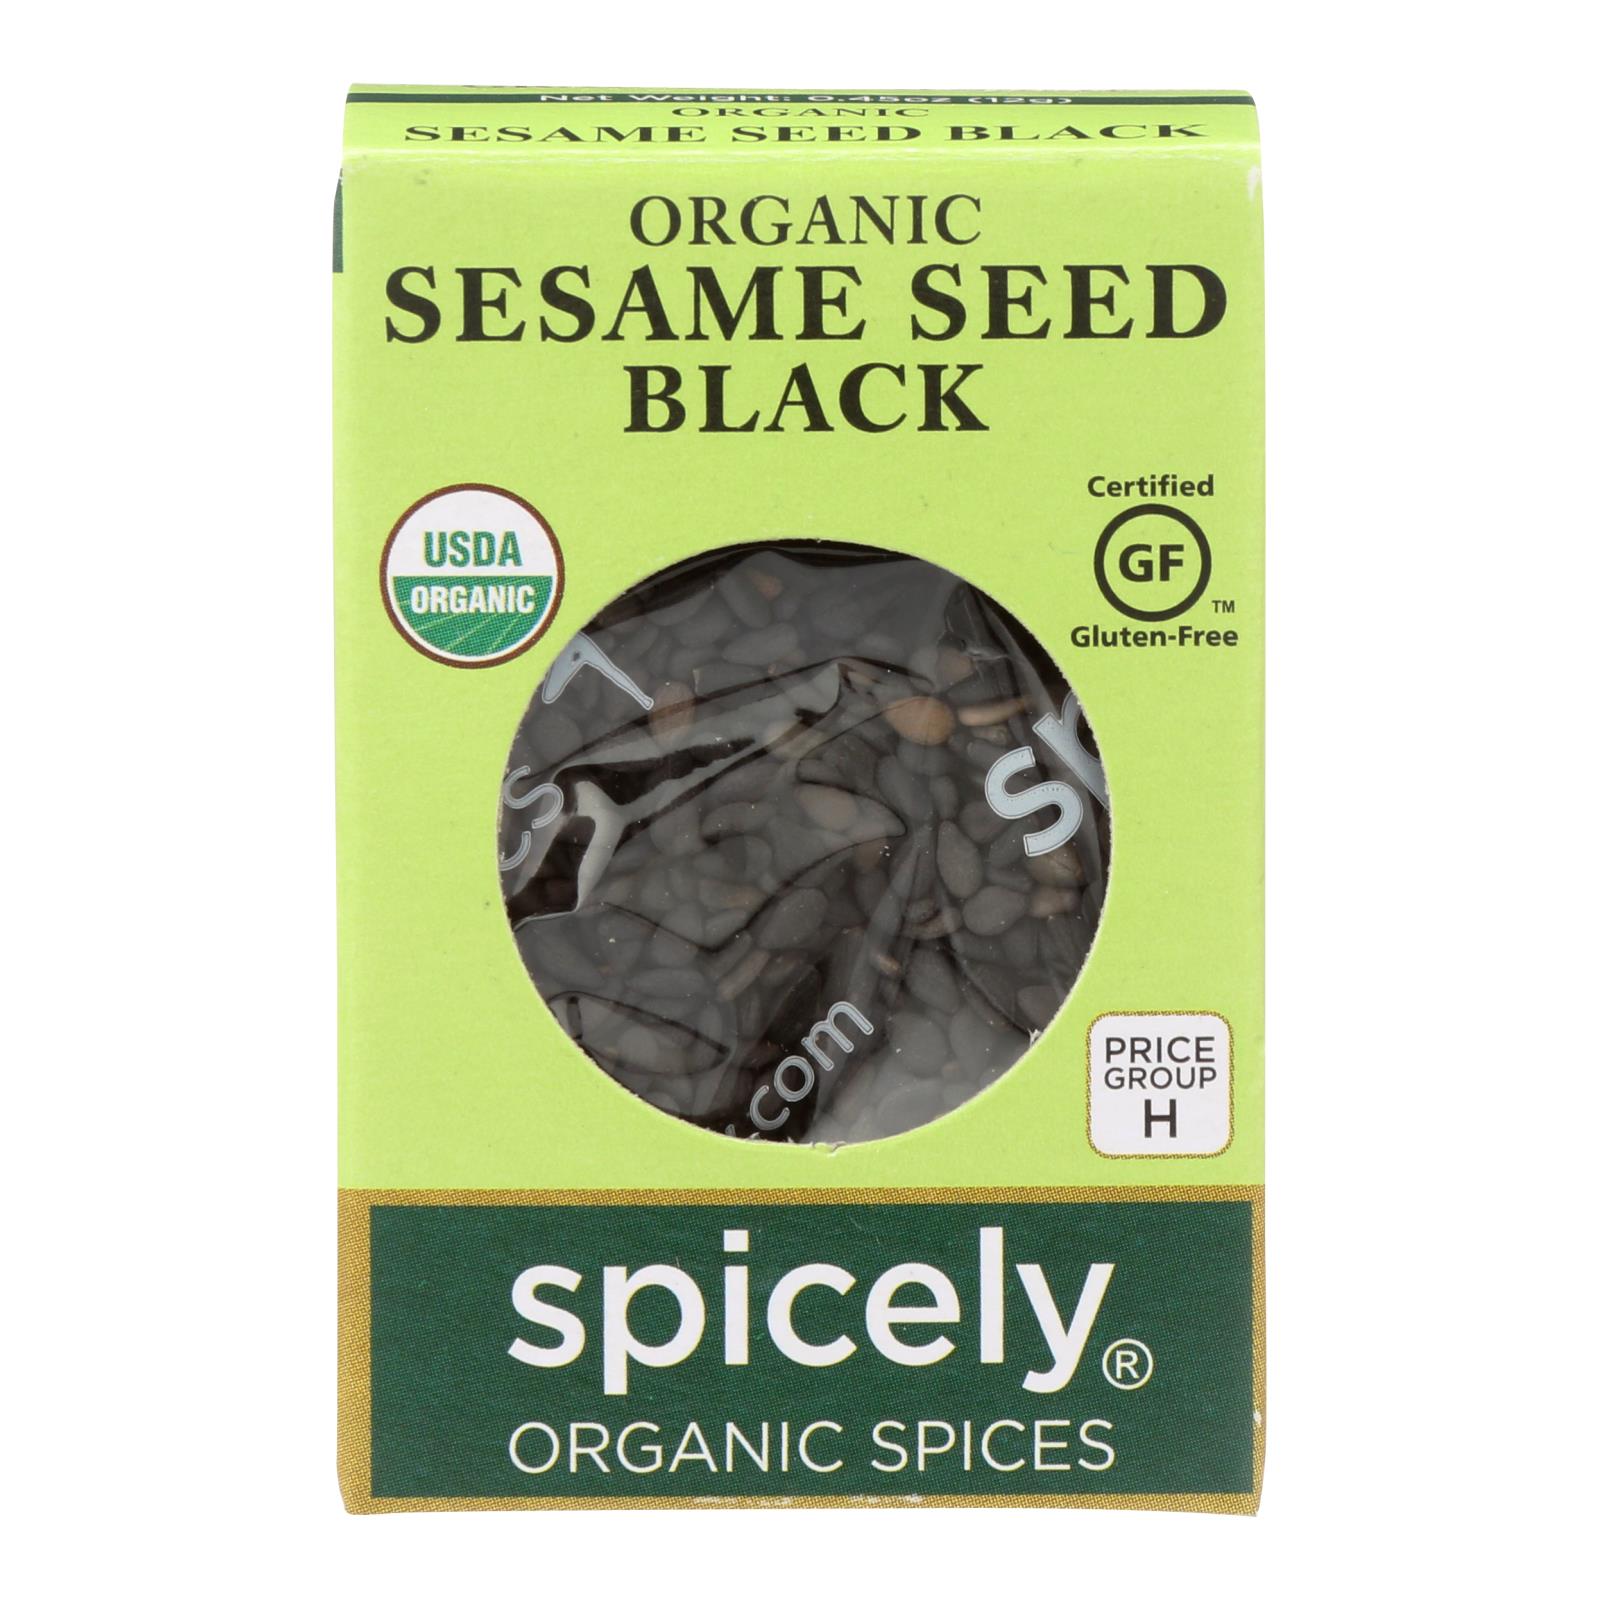 Spicely Organics - Organic Sesame Seed - Black - 6개 묶음상품 - 0.45 oz.